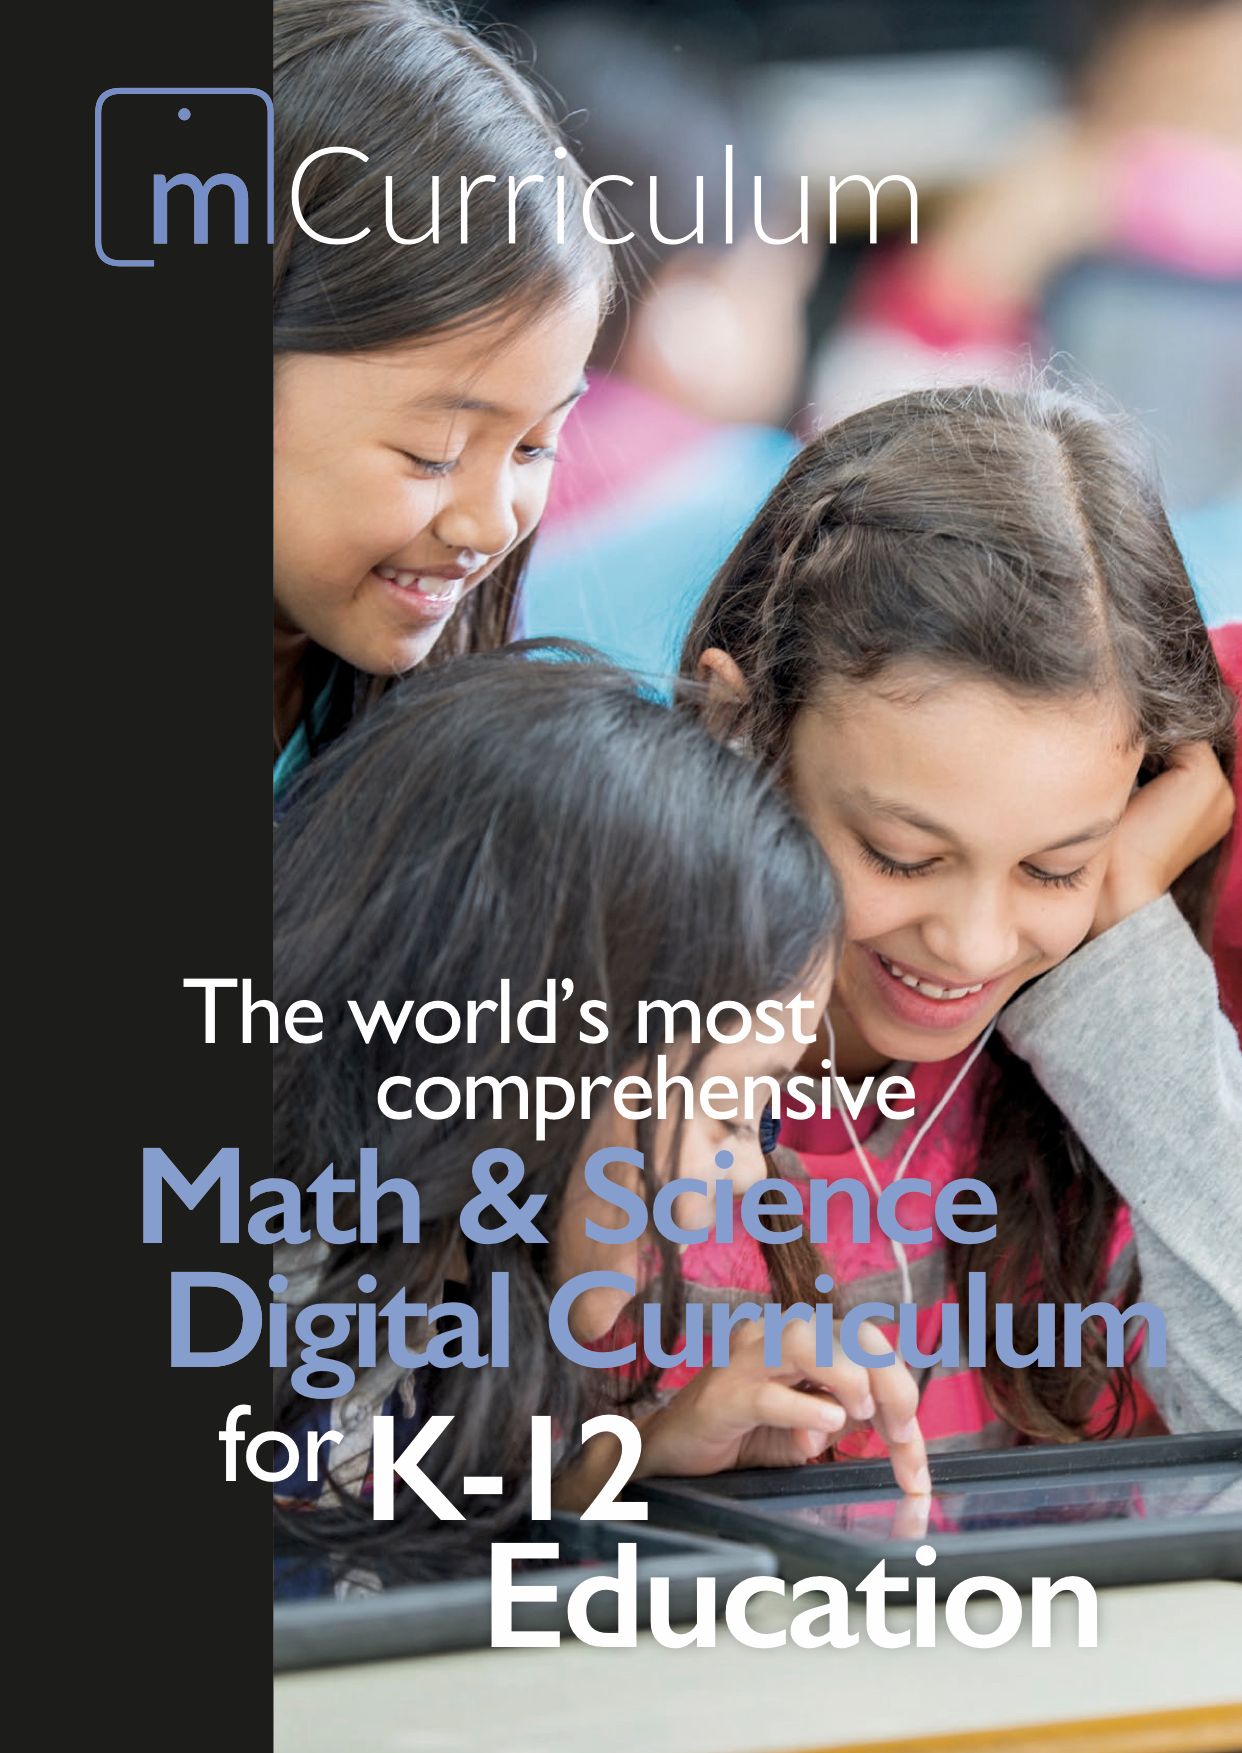 mCurriculum leaflet: the world's most comprehensive Maths & Science digital curriculum